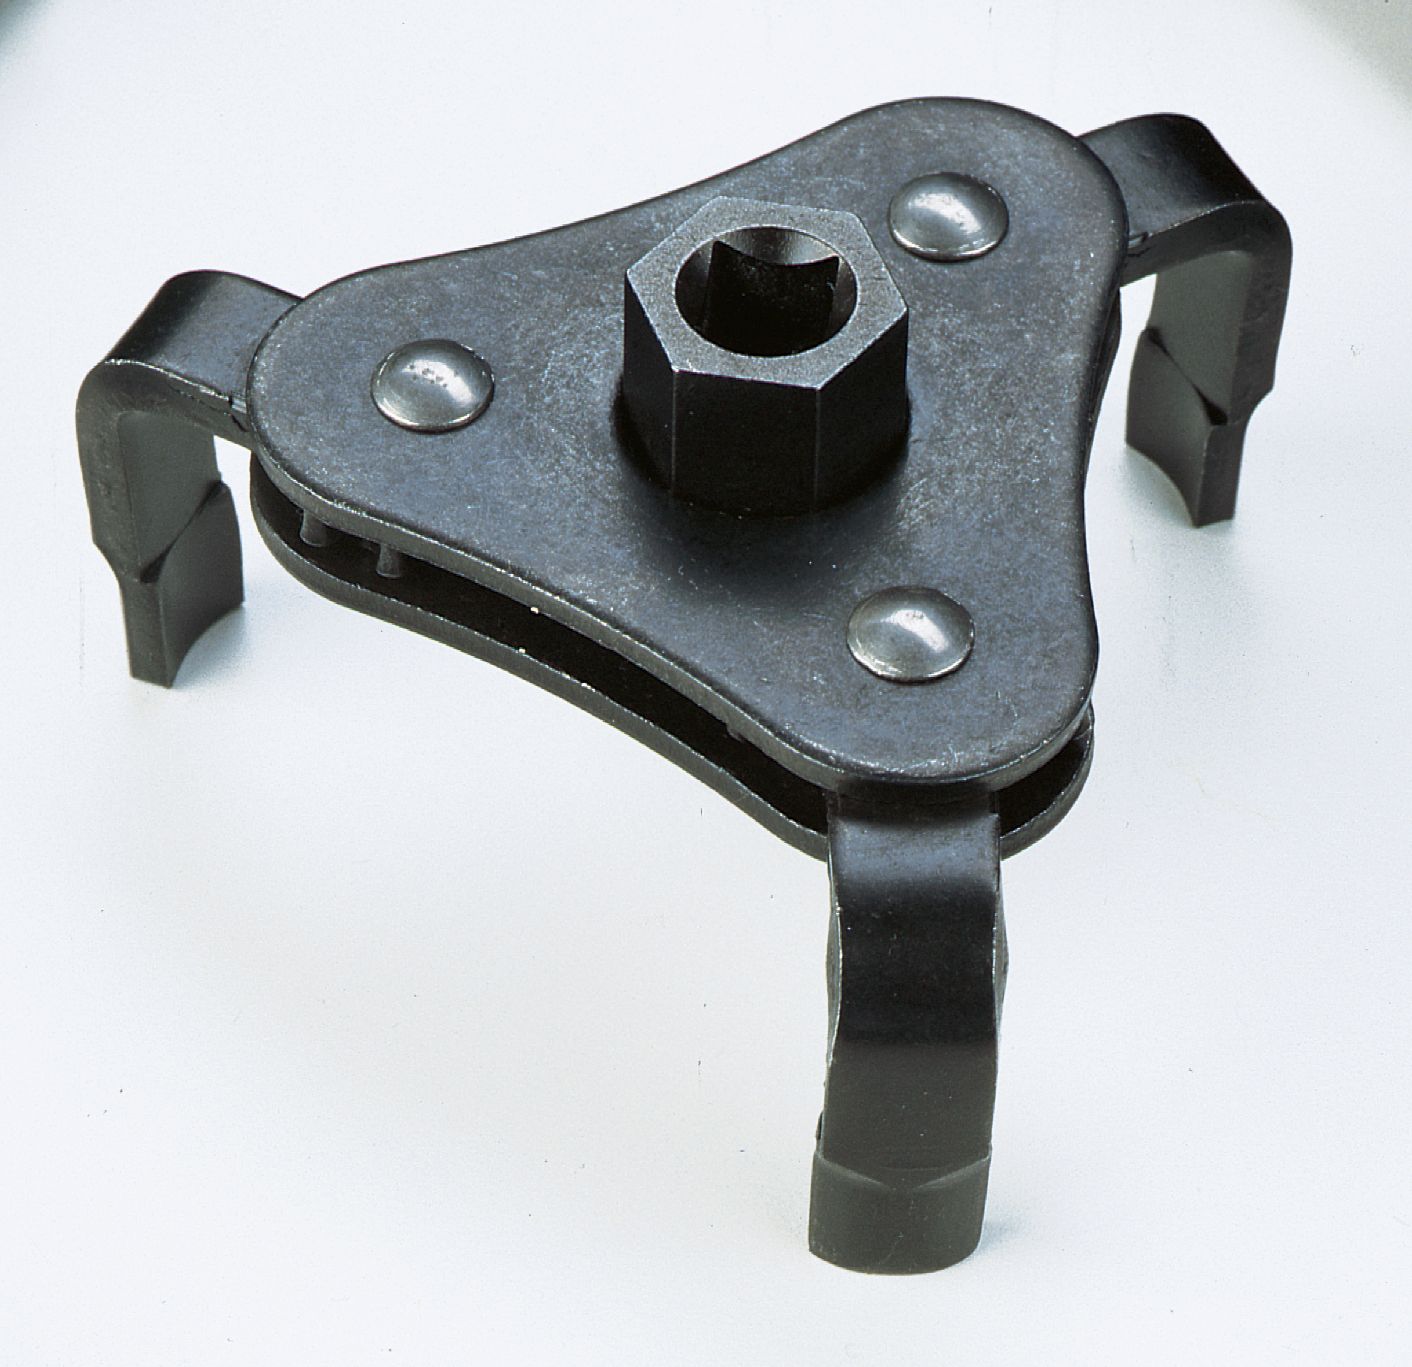 Craftsman Adjustable Wrench for Oil Changes